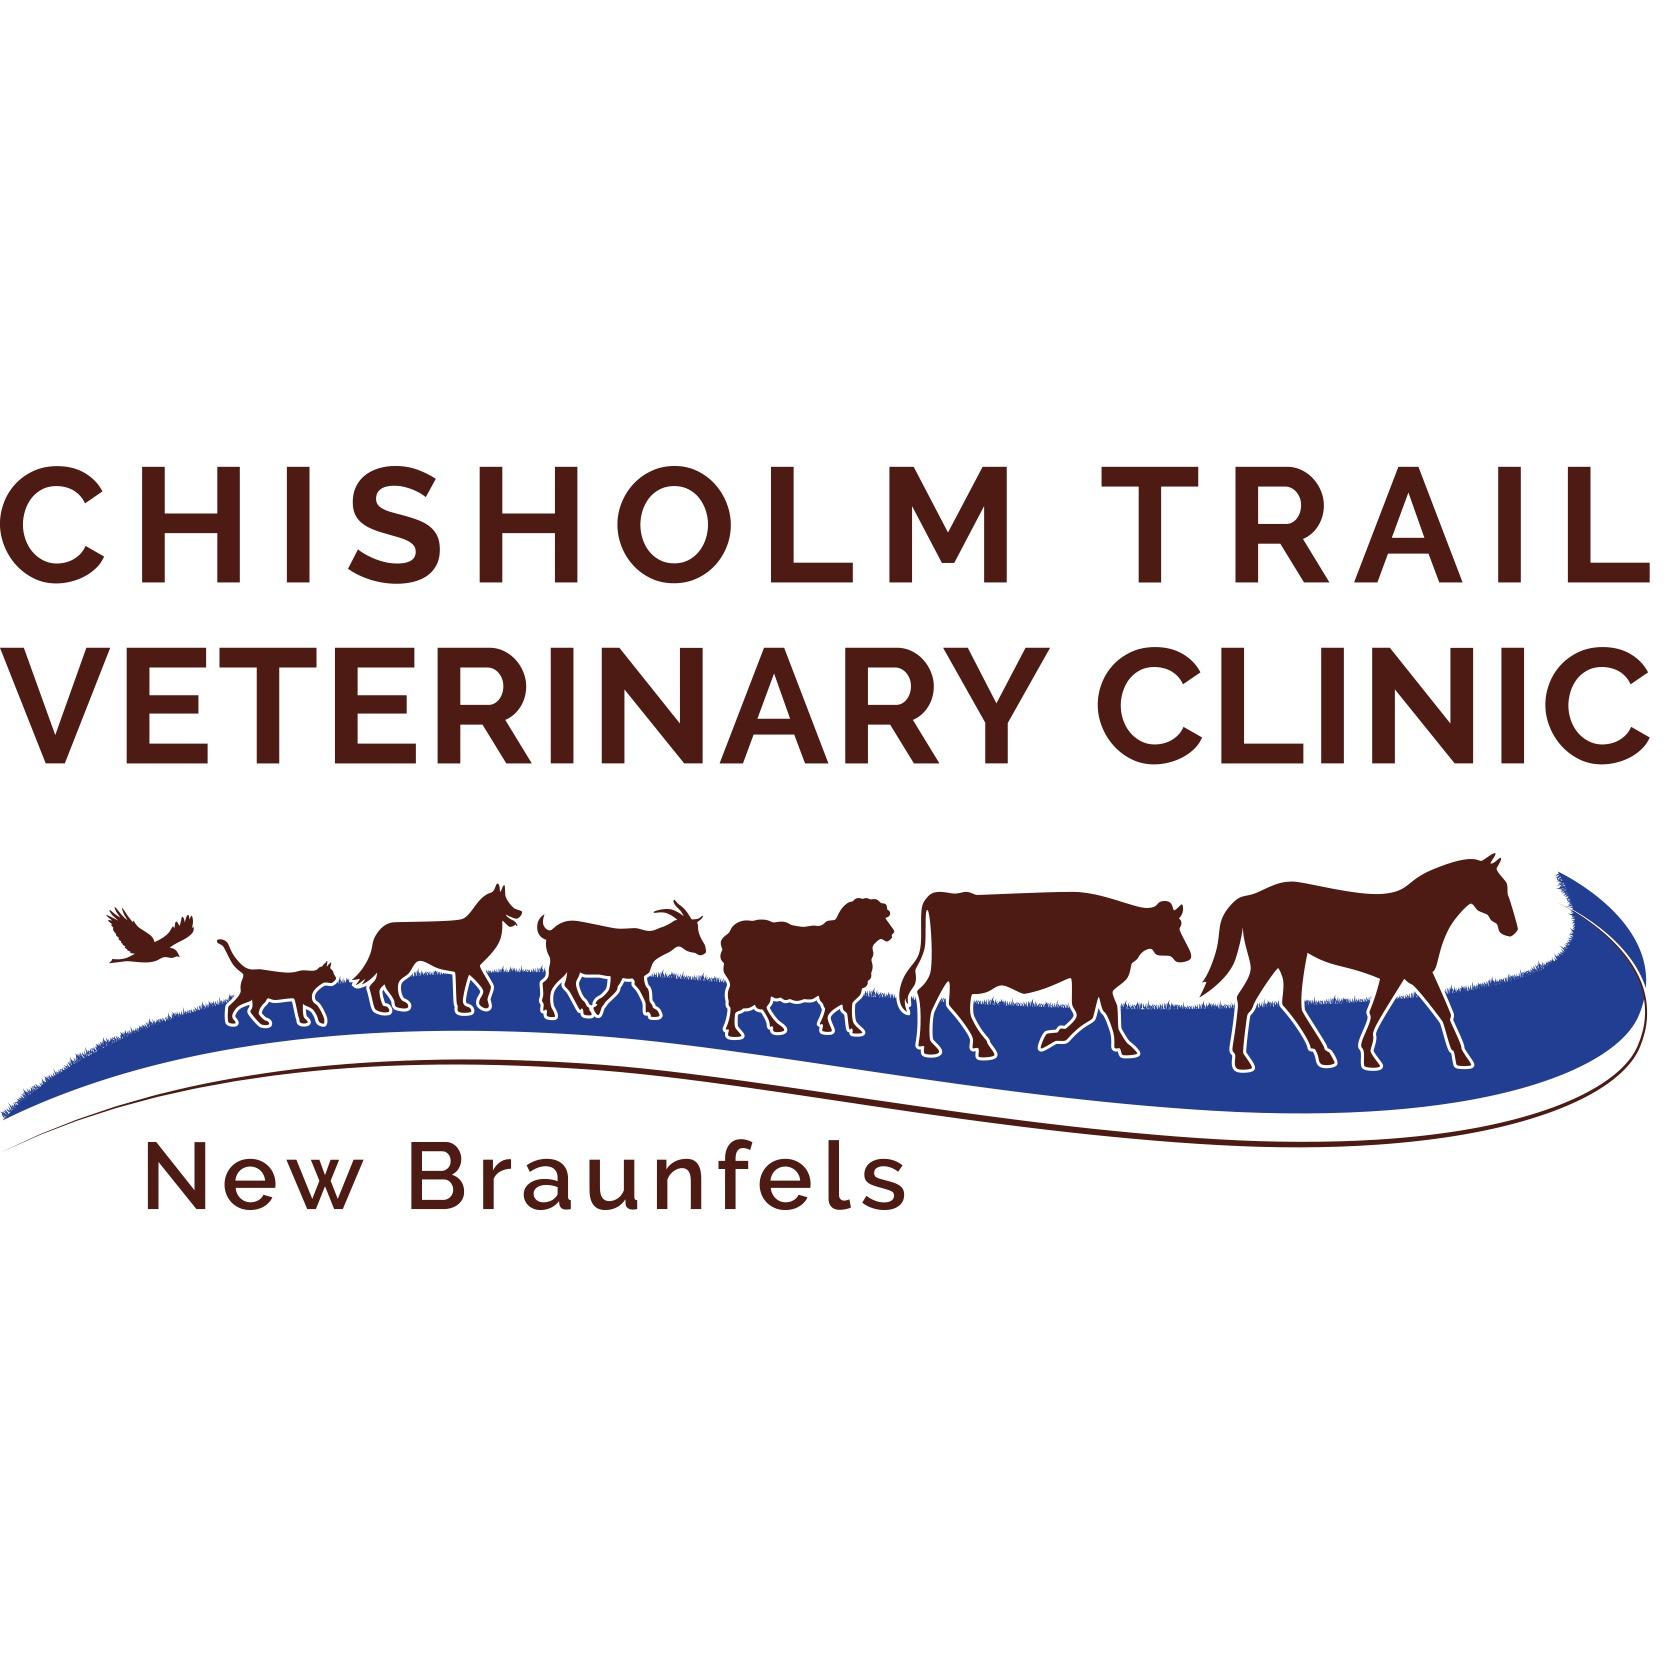 Chisholm Trail Veterinary Clinic of New Braunfels Logo